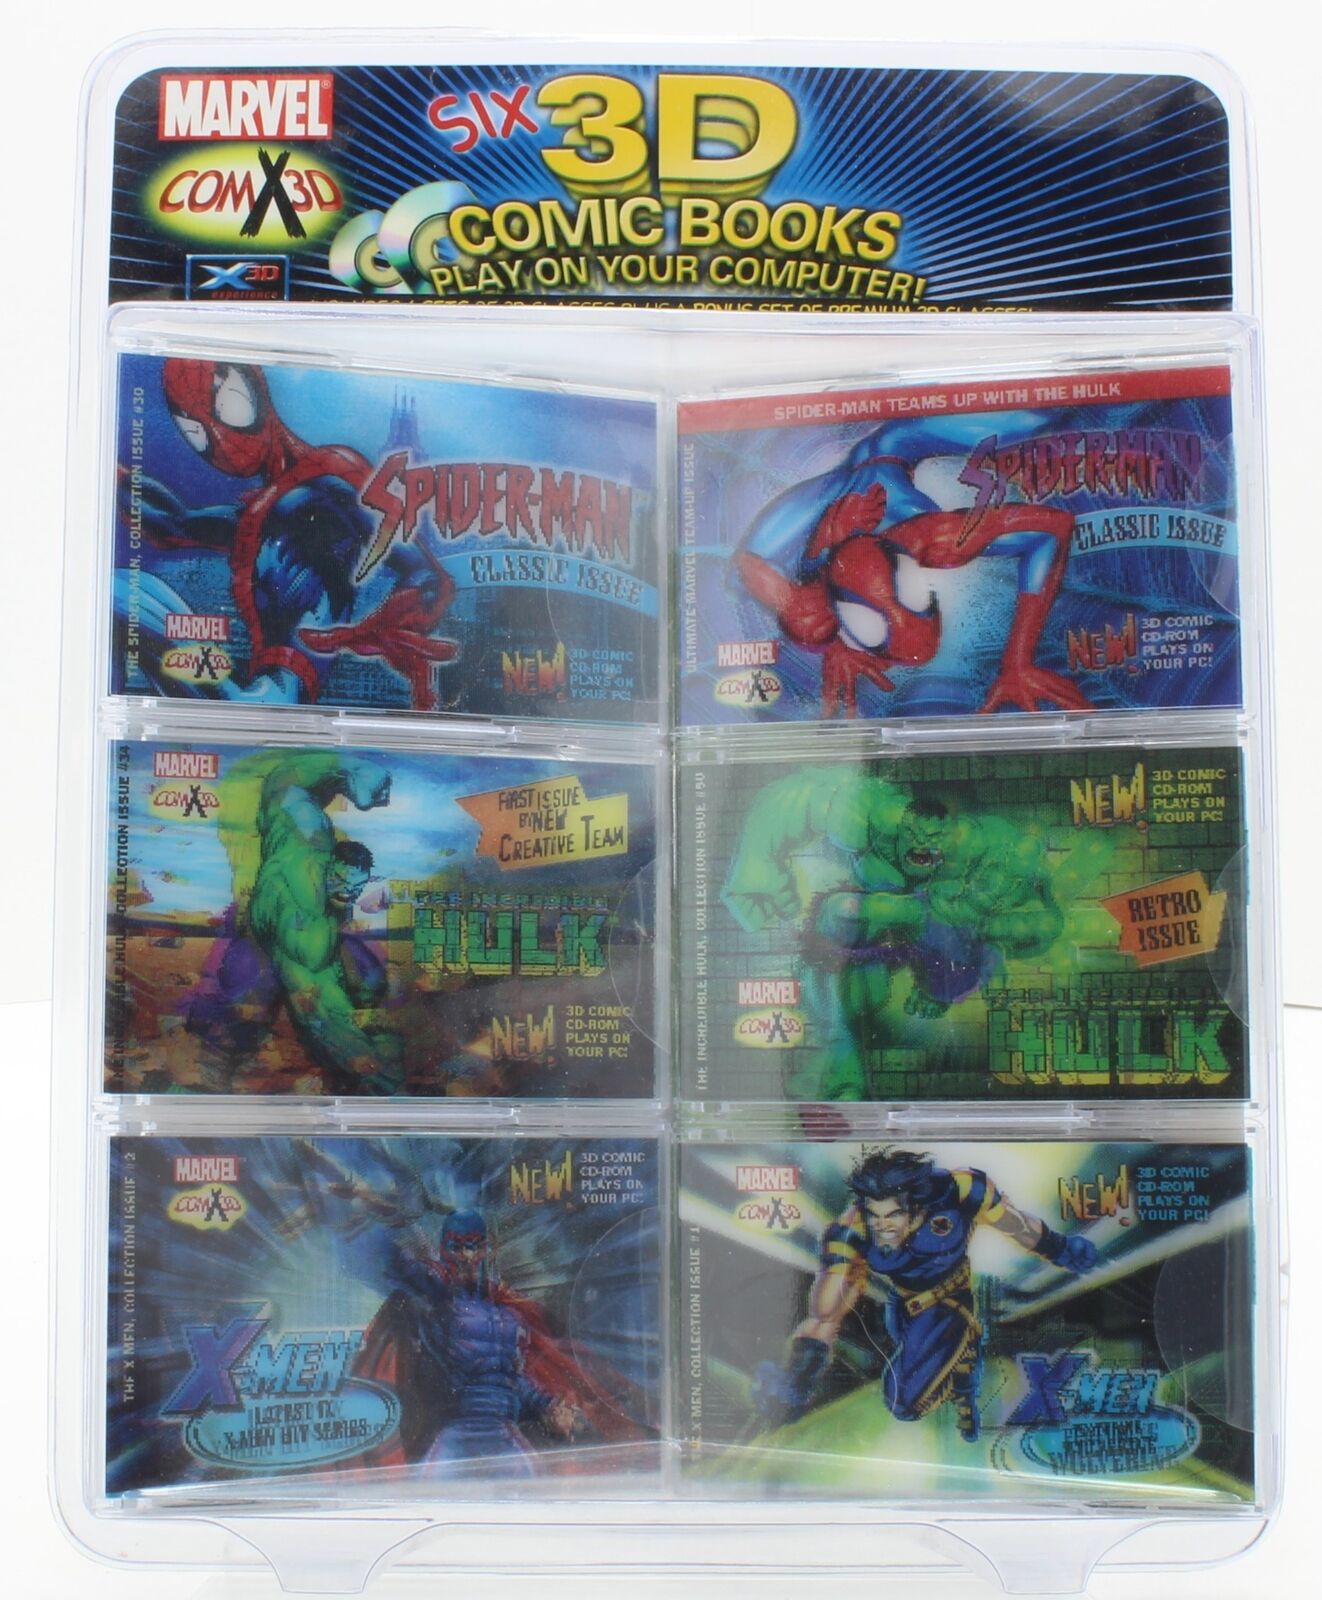 Marvel - ComX3D Six 3D Comic Books Play on Computer - 2003